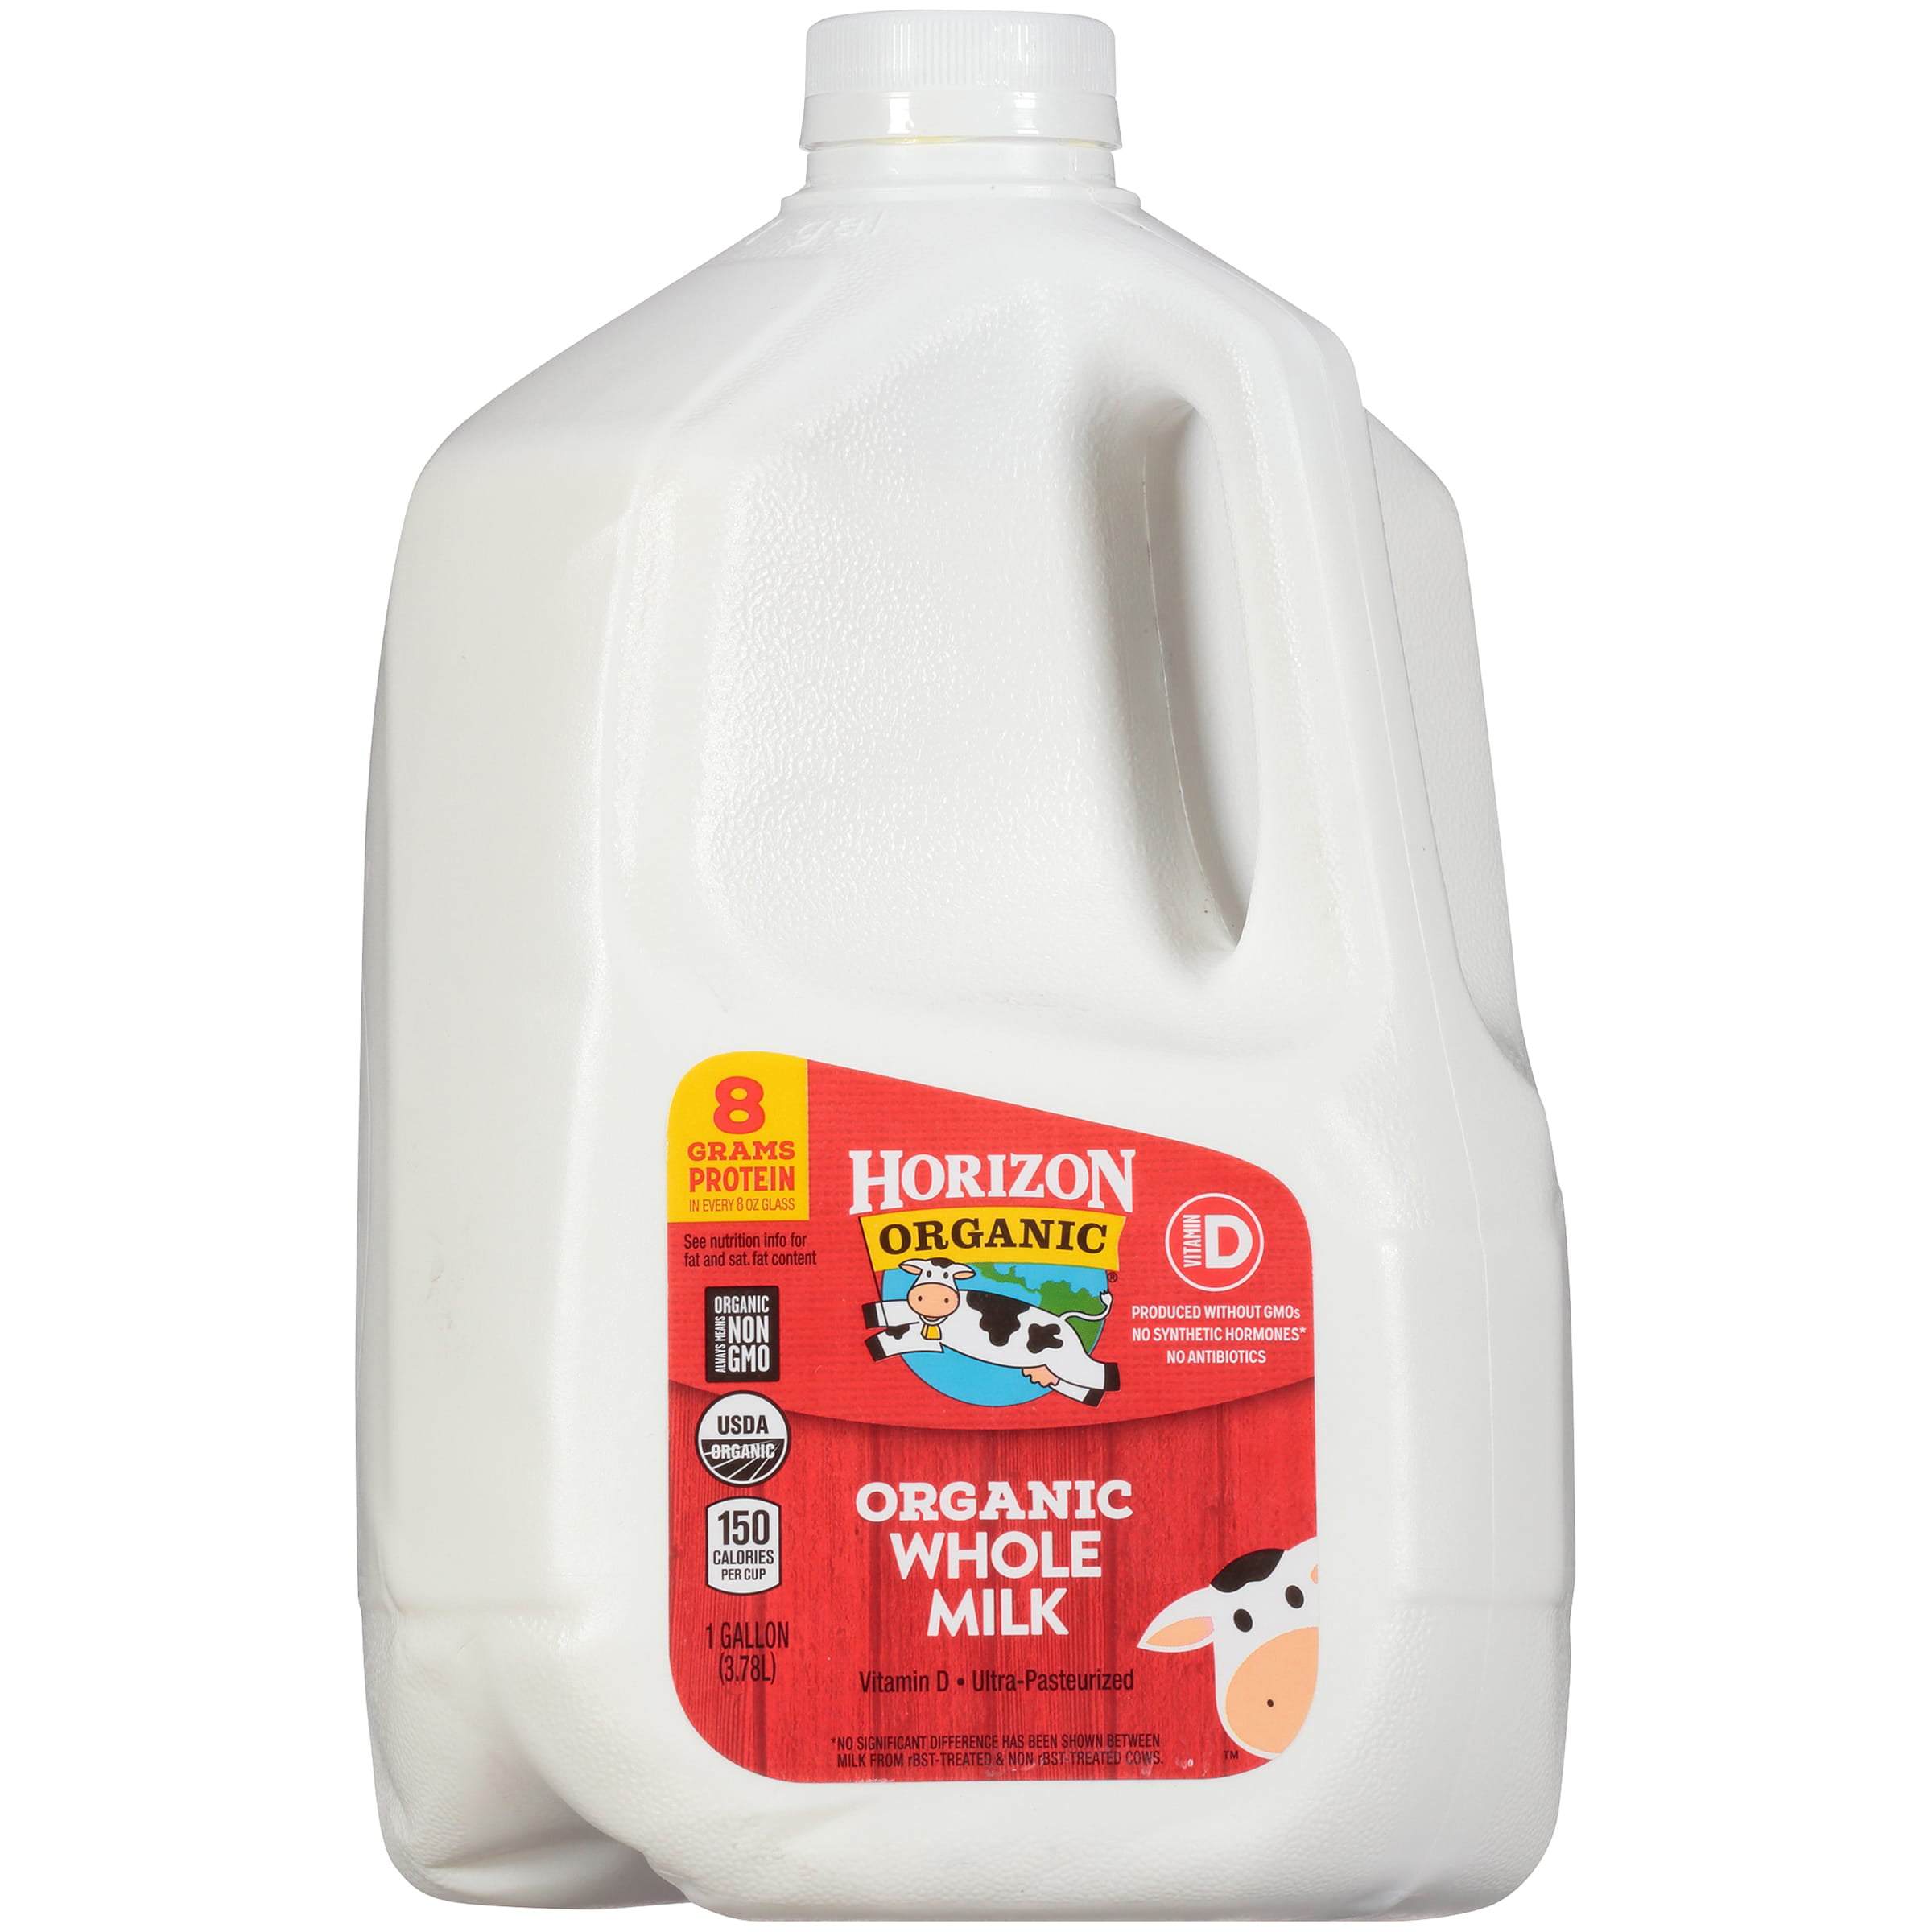 Horizon Organic Whole High Vitamin D Milk 1 Gallon